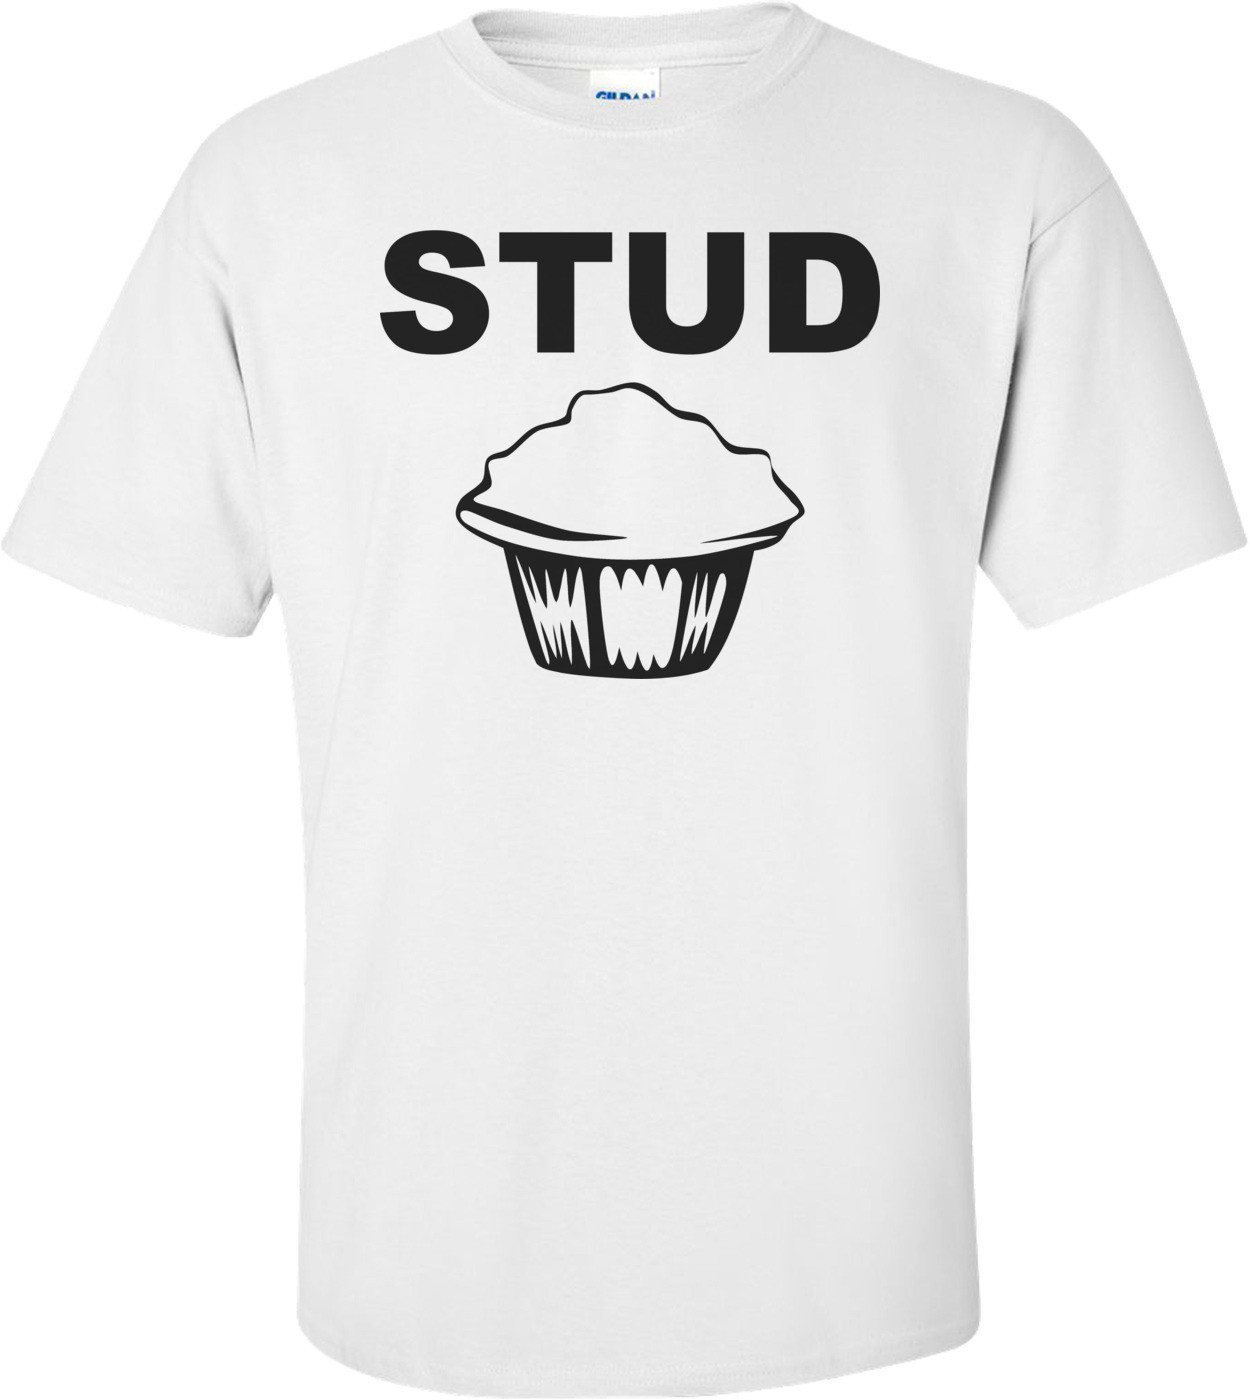 Stud Muffin T-shirt